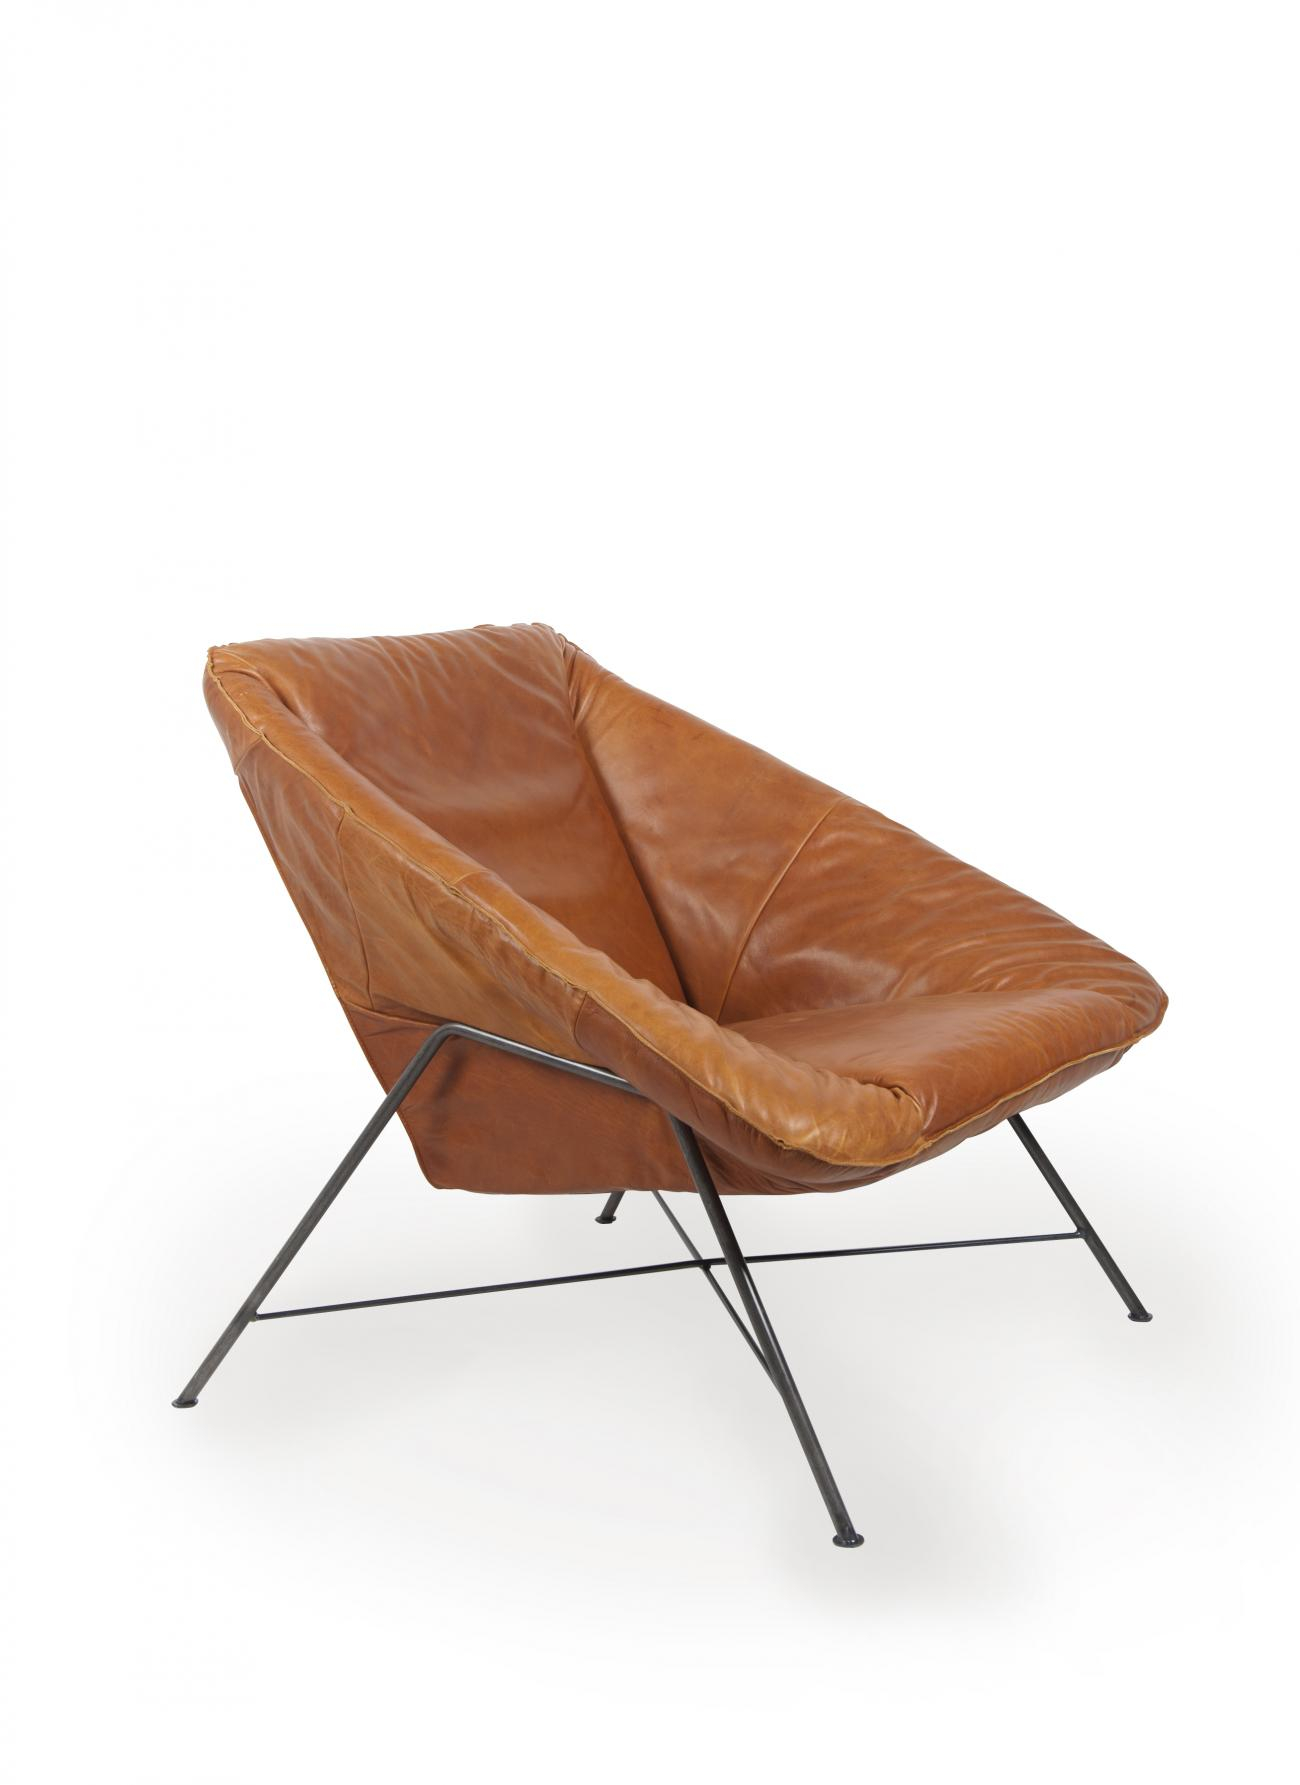 https://www.fundesign.nl/media/catalog/product/b/r/brazil_armchair_with_arm_old_glory_frame_luxor_cognac_oblique.jpg